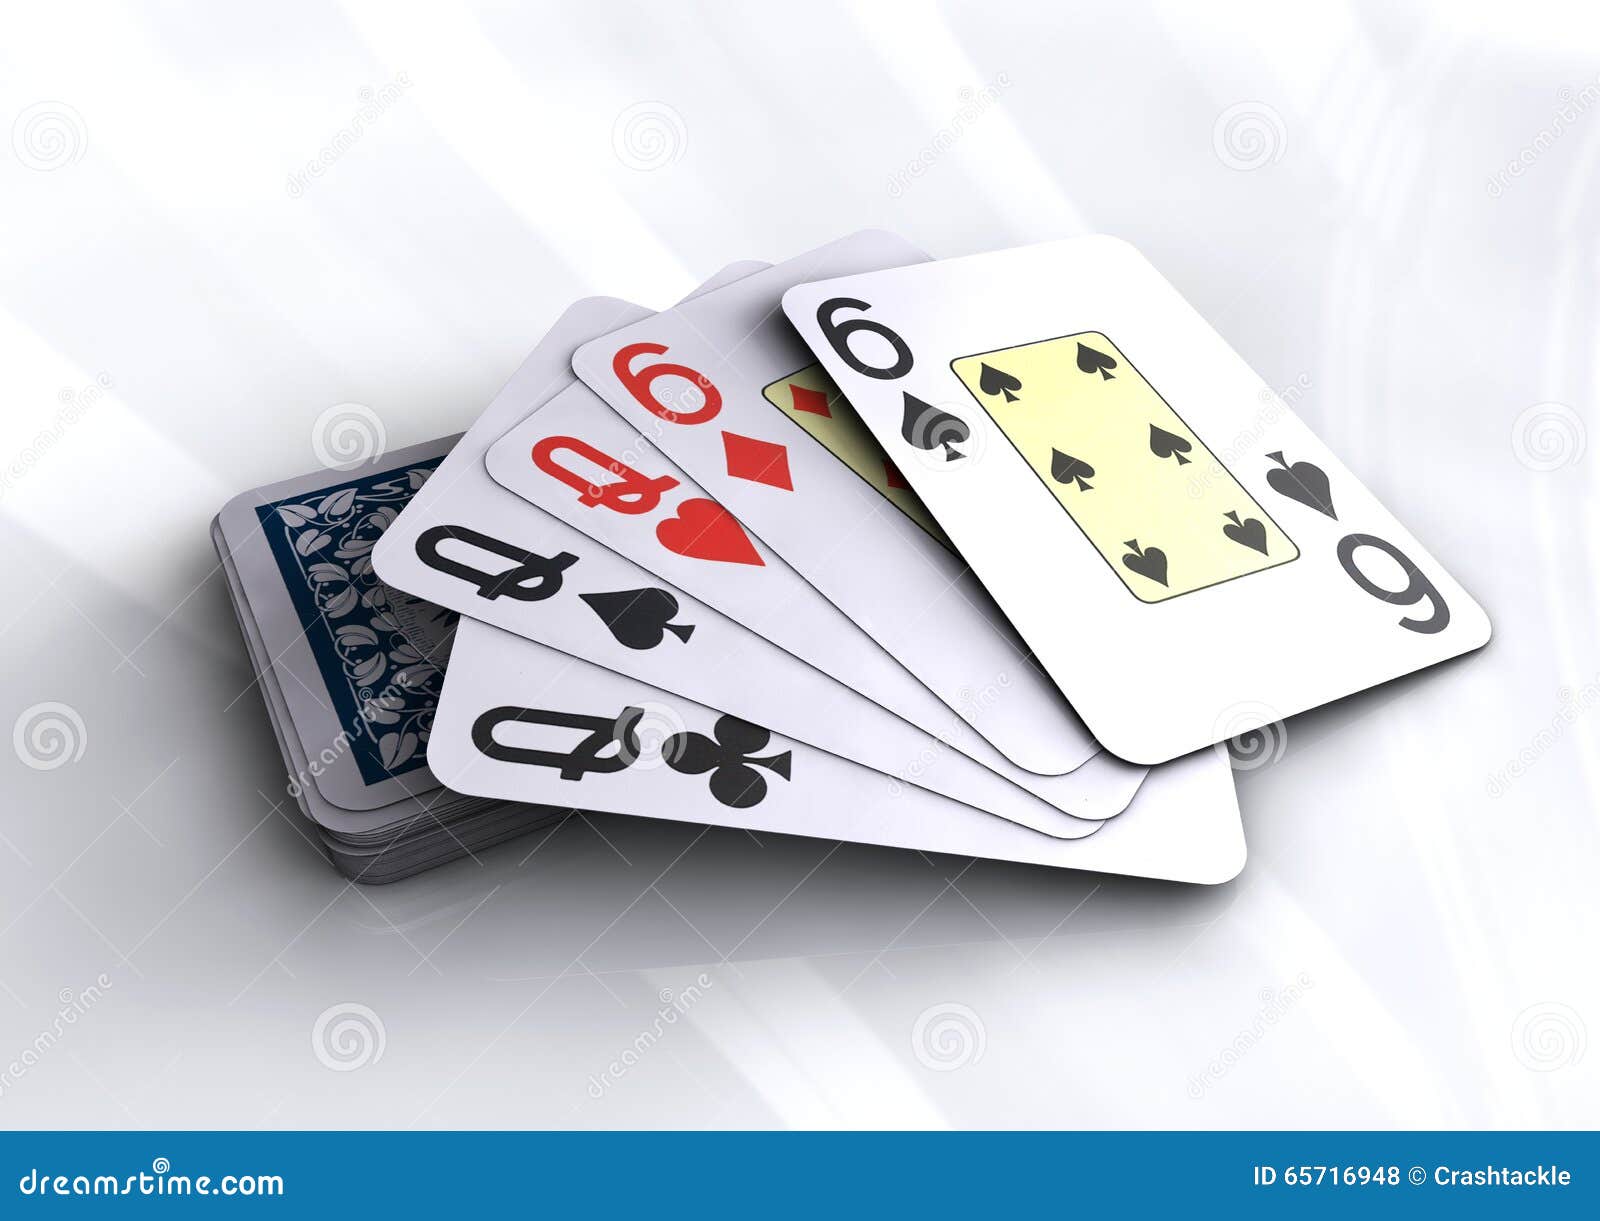 deck of poker cards revealing full house hand.